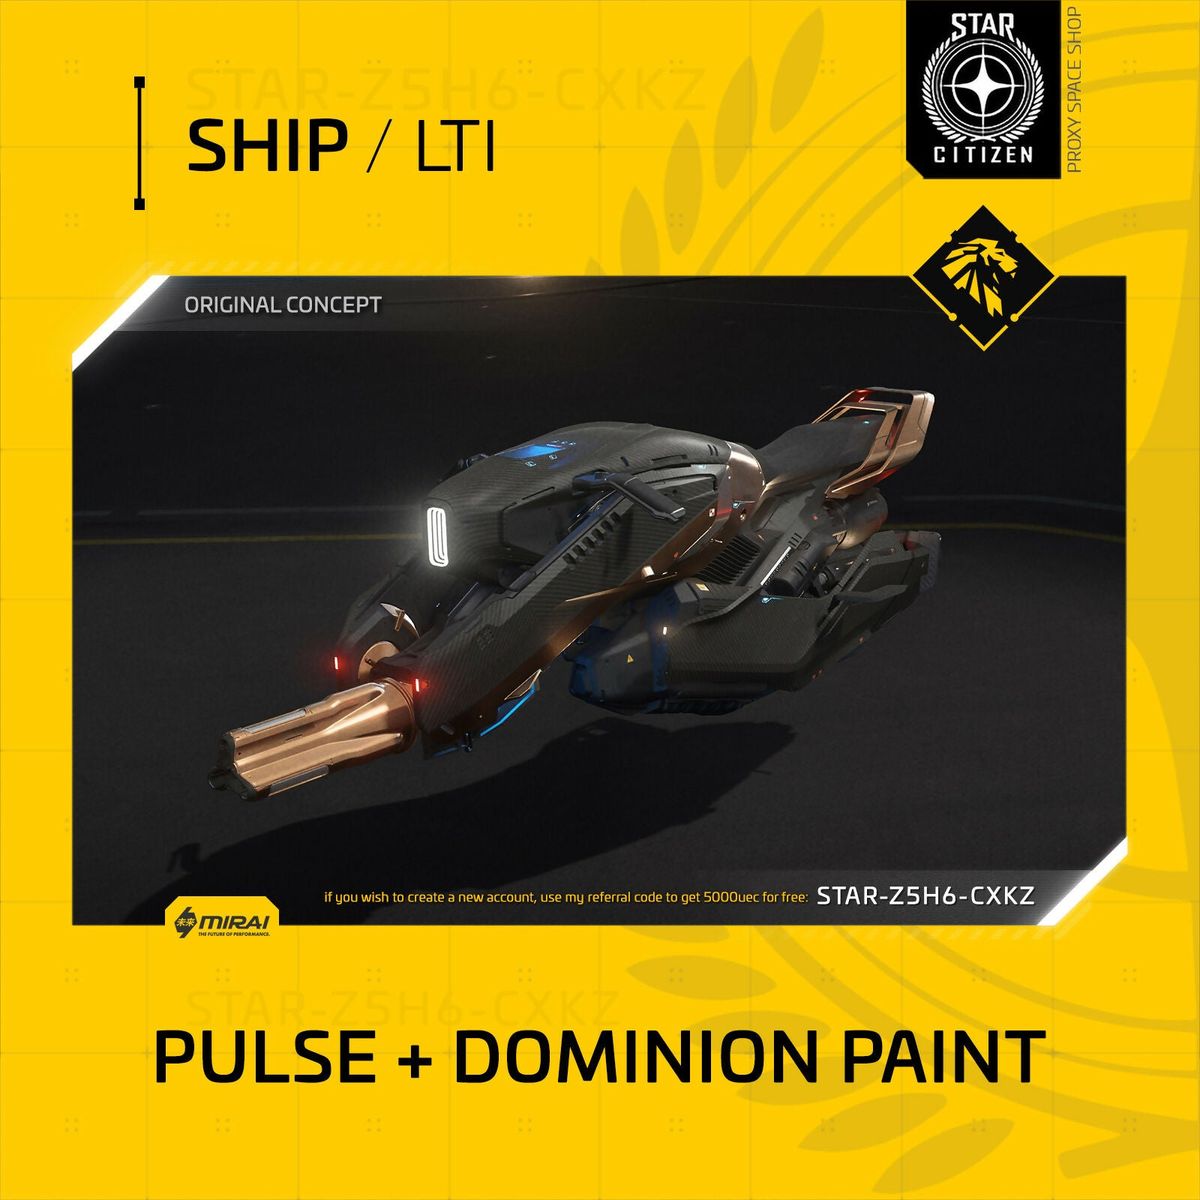 Mirai Pulse Plus Dominion Paint - Lti - Original Concept OC